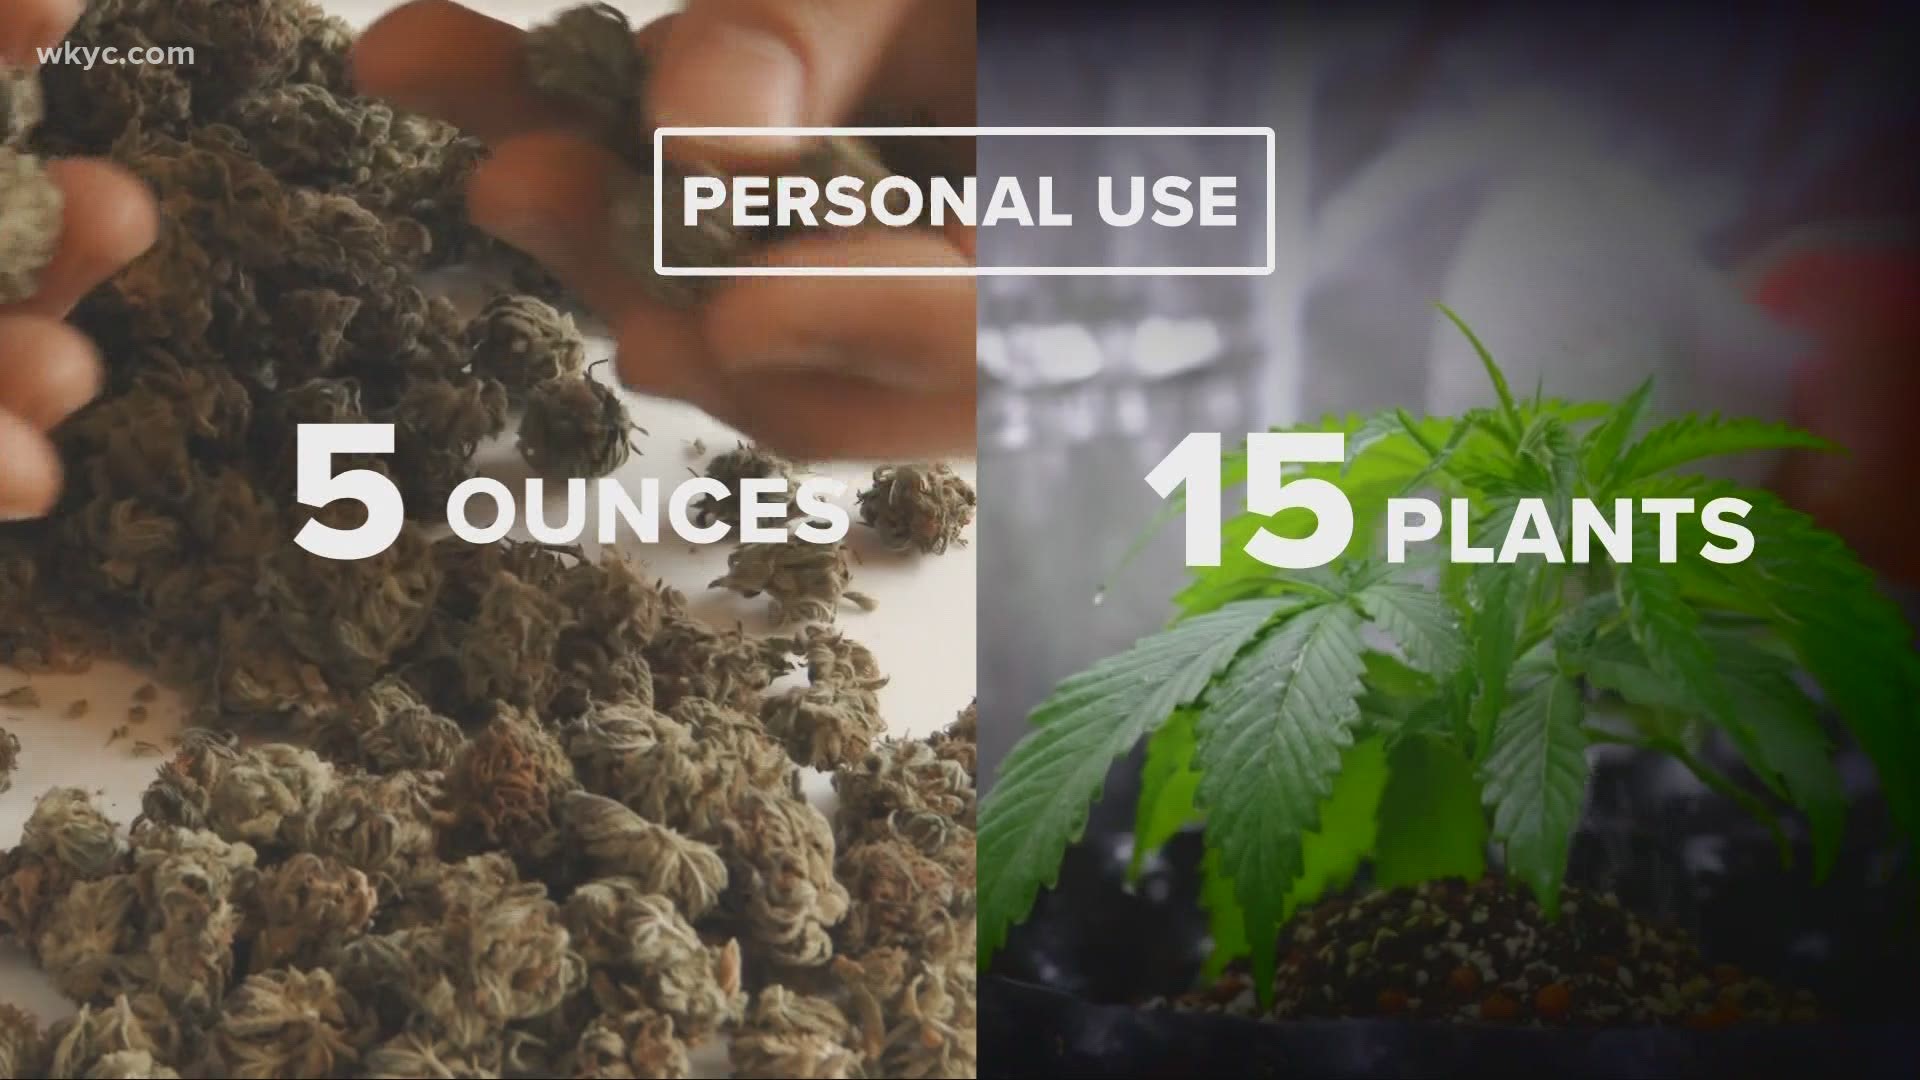 The push to make marijuana use legal in Ohio